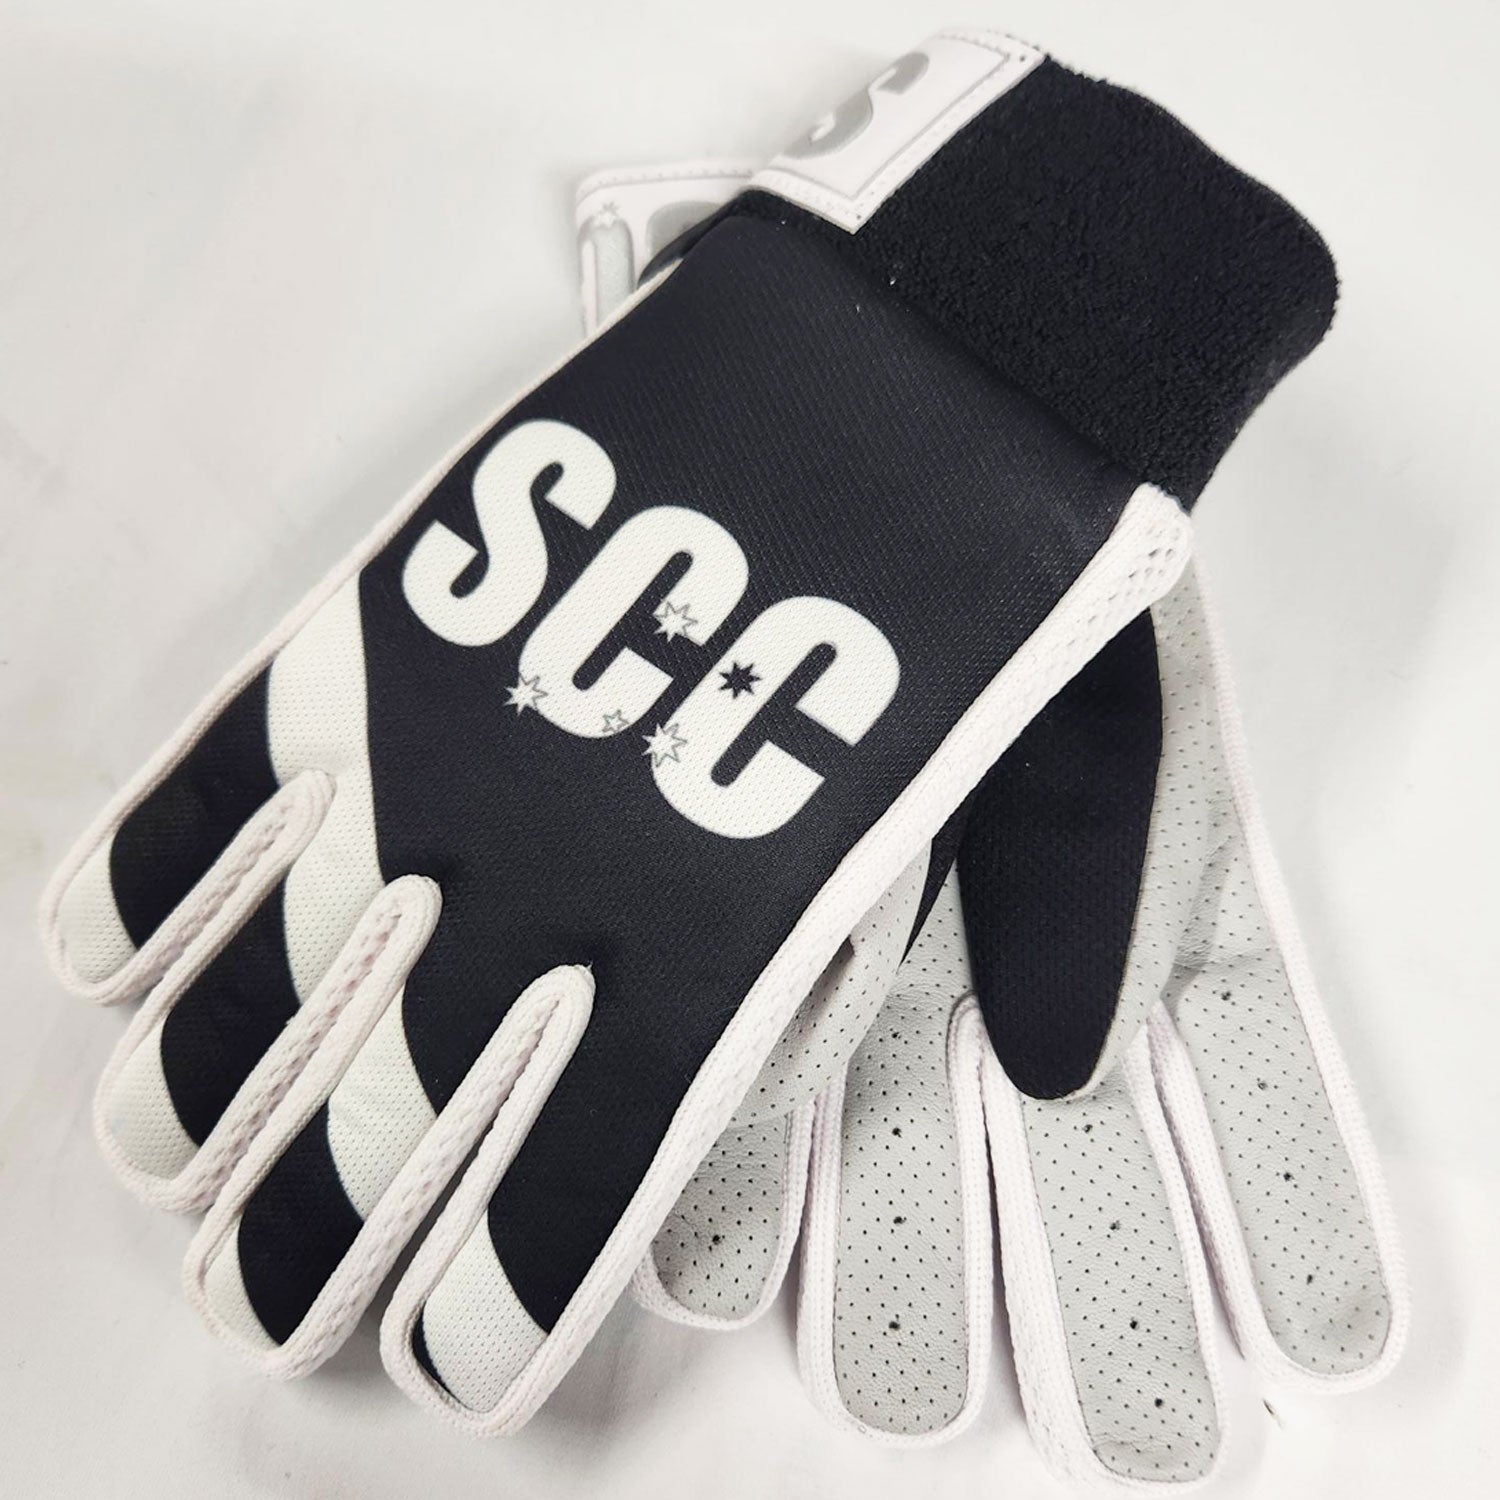 Southern Cross Cricket Assassin Traditional Indoor Cricket Batting Gloves